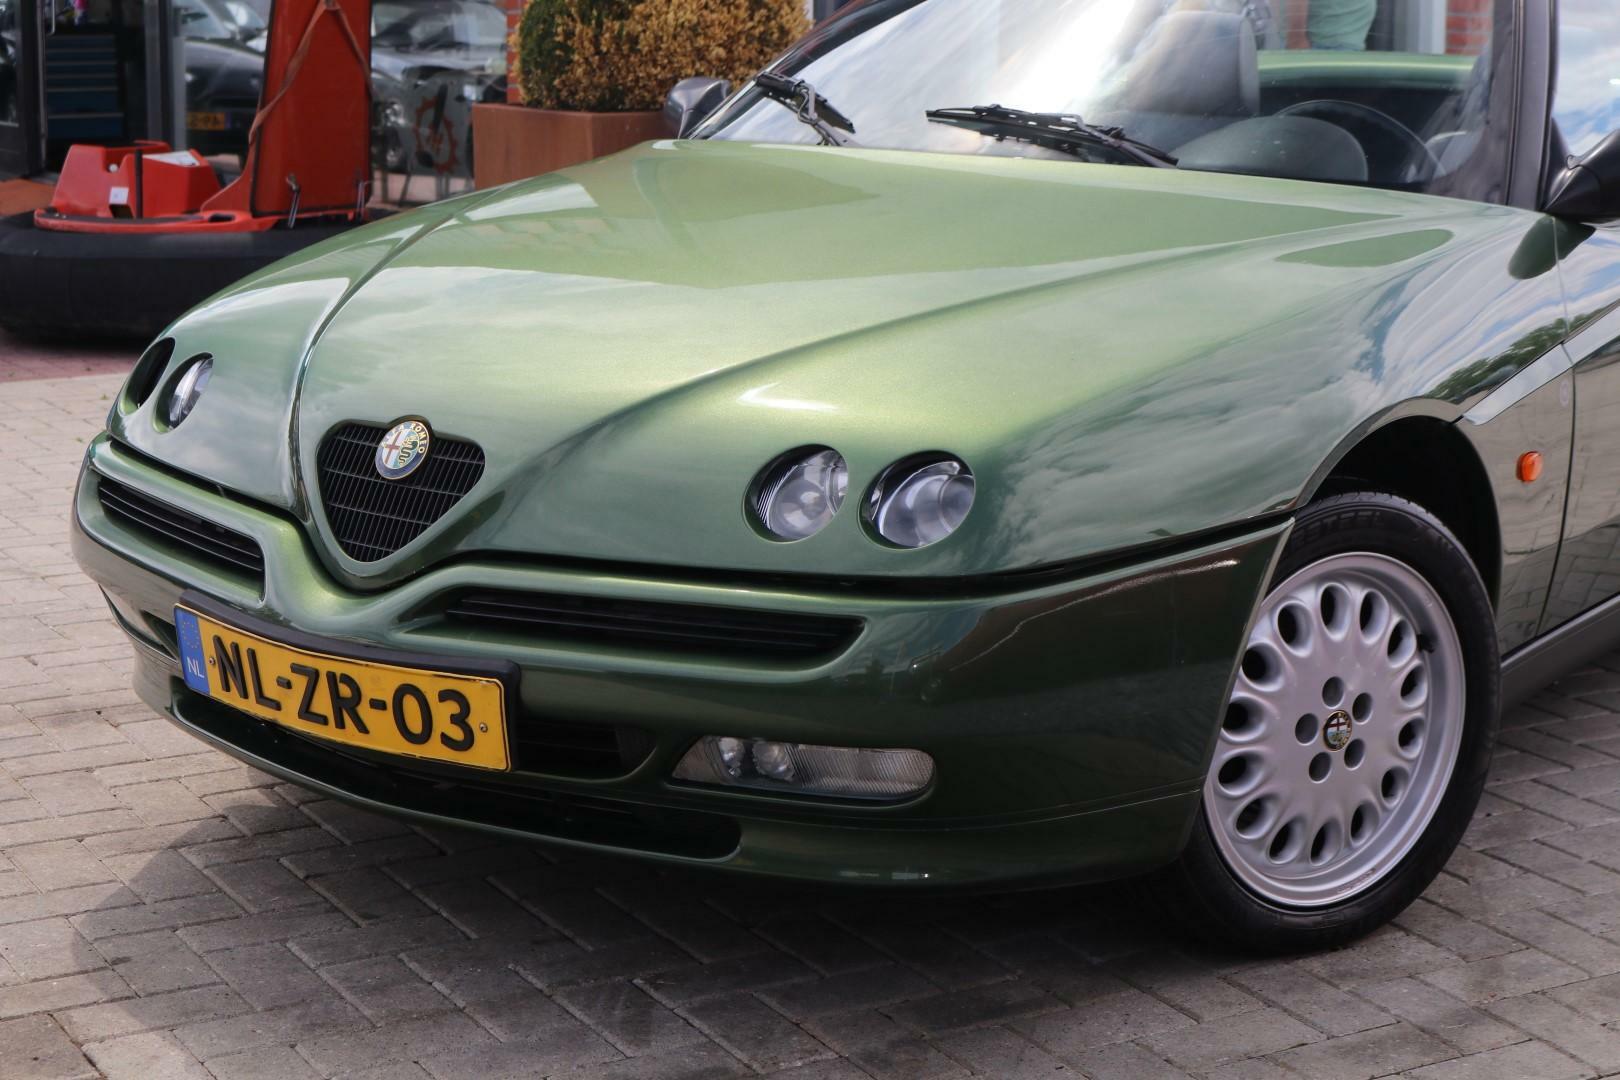 Caroutlet Groningen - Alfa Romeo Spider 2.0-16V T.Spark | NAP | MOOIE STAAT | BEIGE KAP